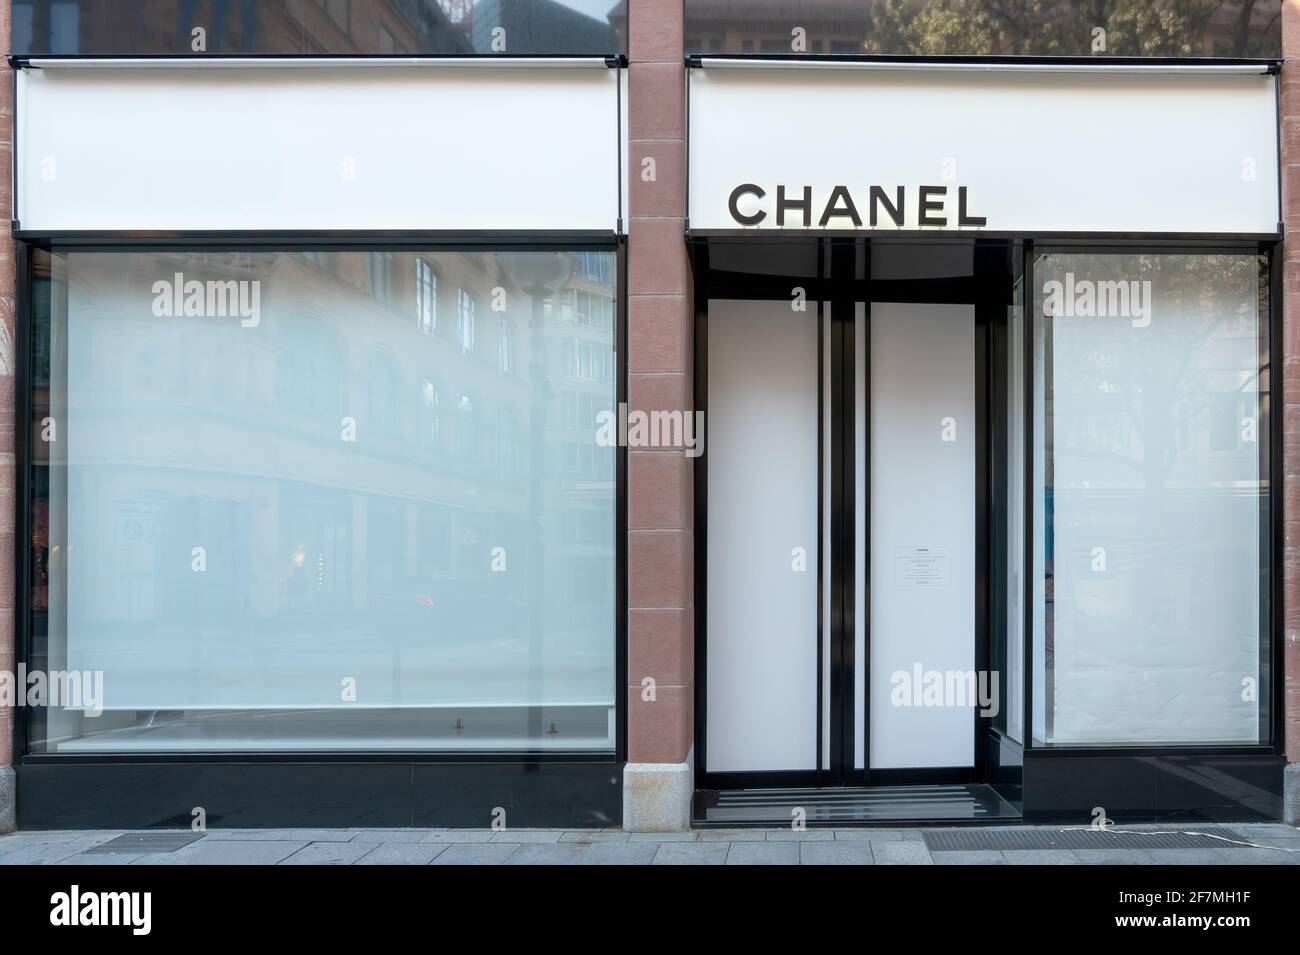 Chanel frankfurt